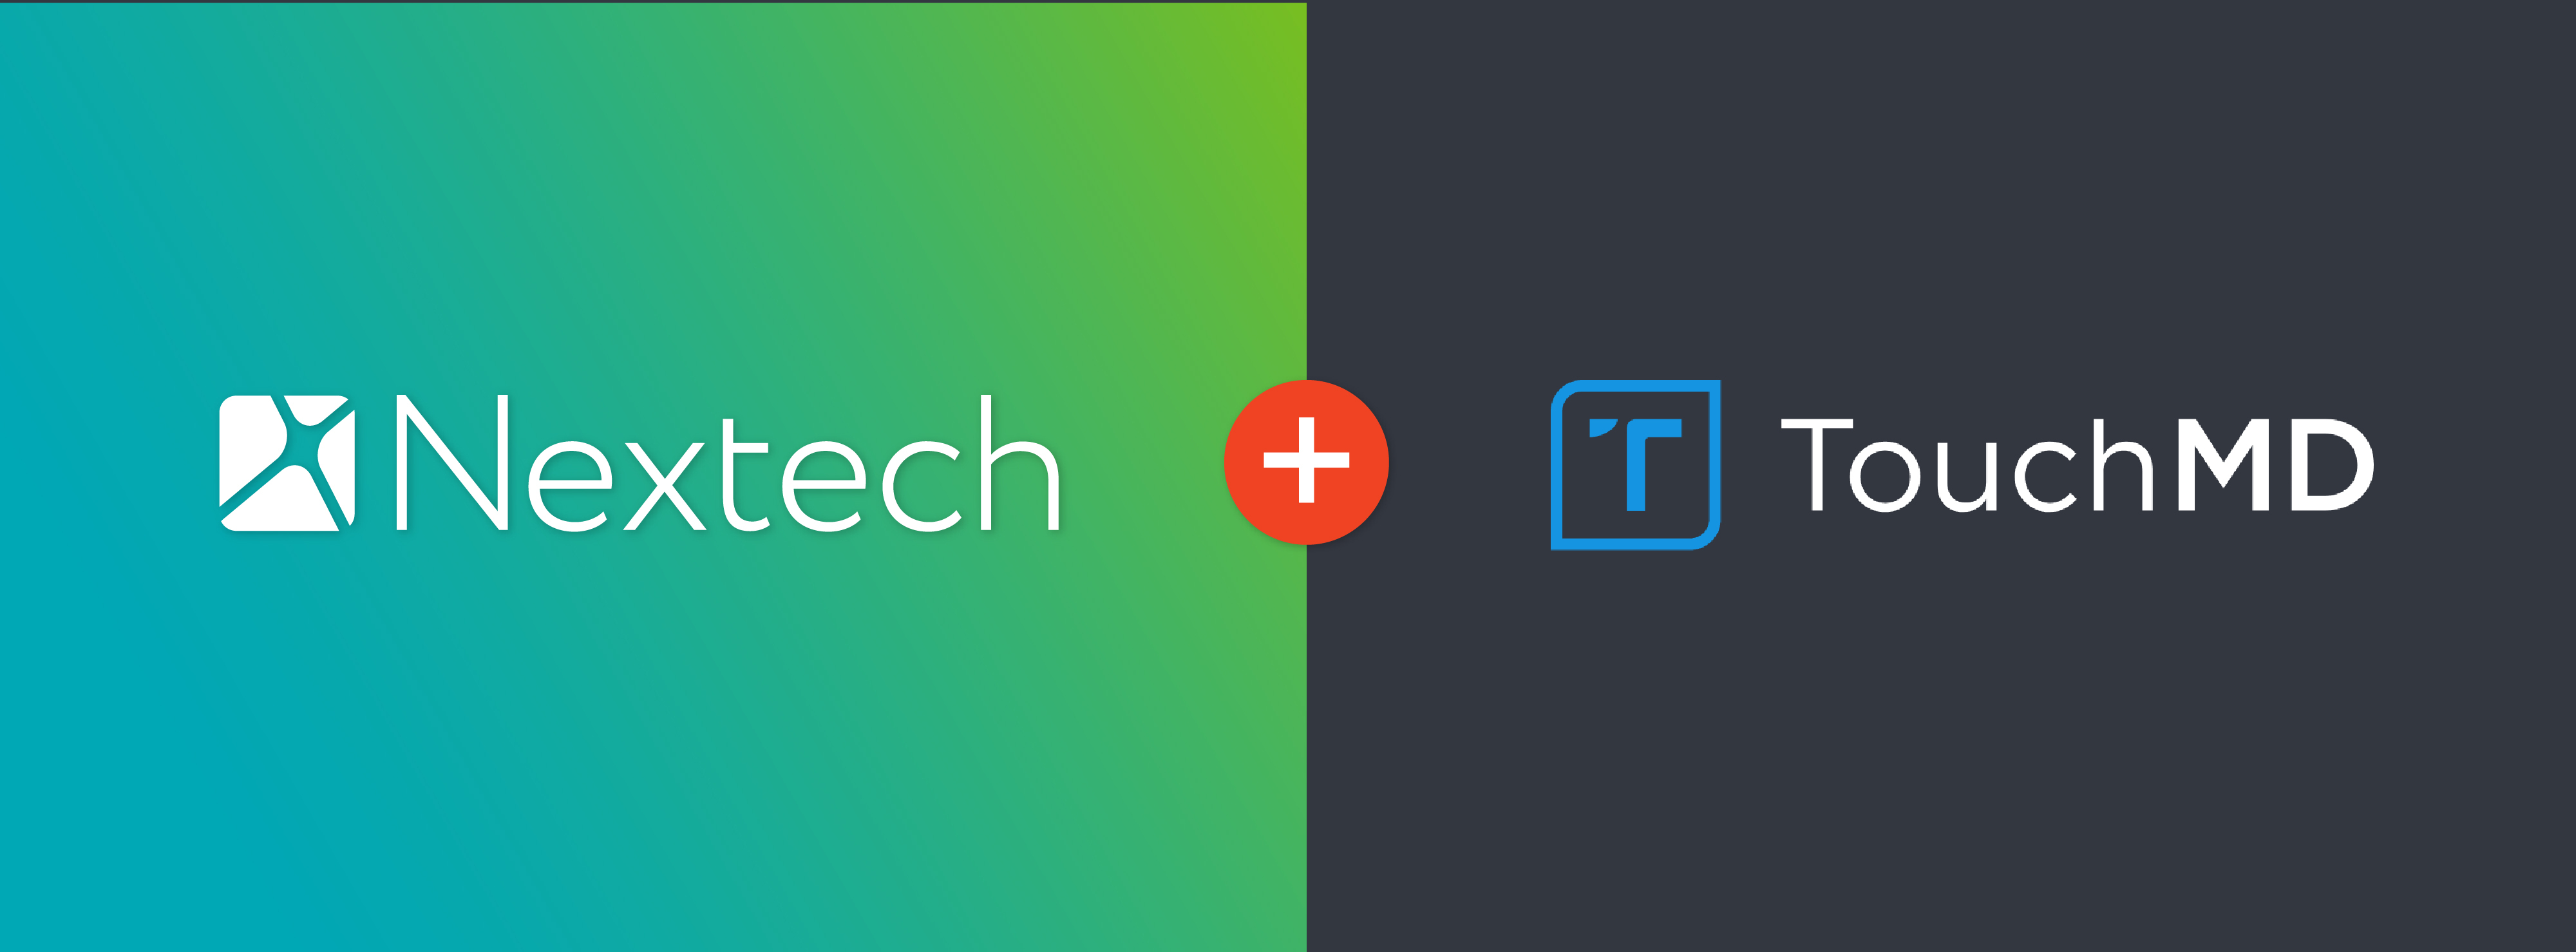 Nextech Announces Acquisition of TouchMD, Enhancing Specialty Practice Patient Experience